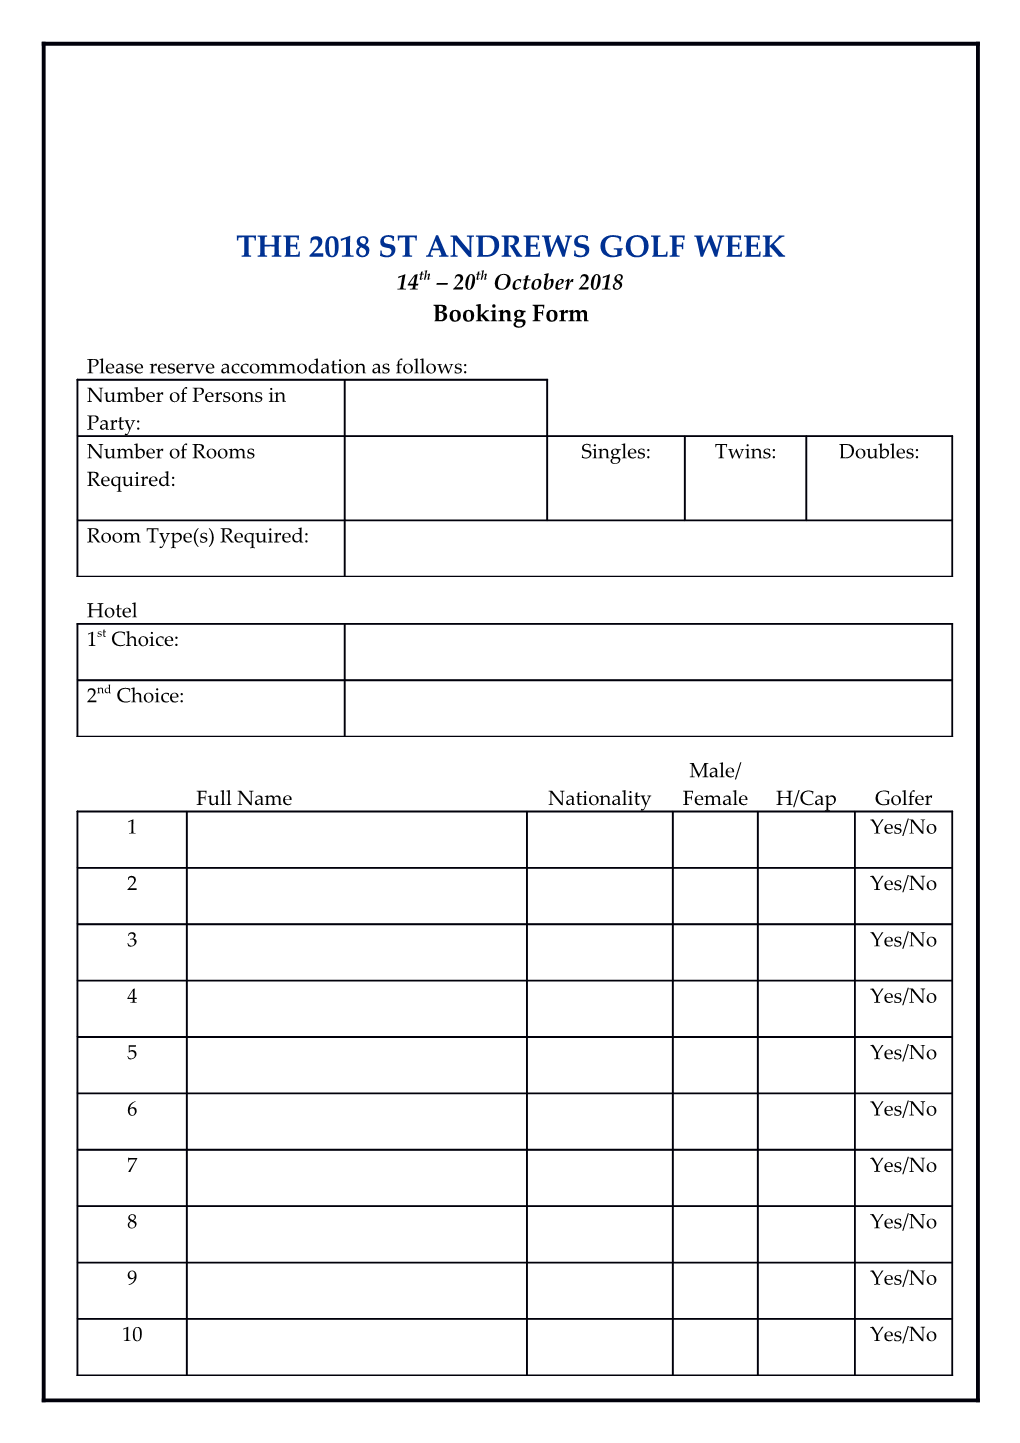 The 2018 St Andrews Golf Week